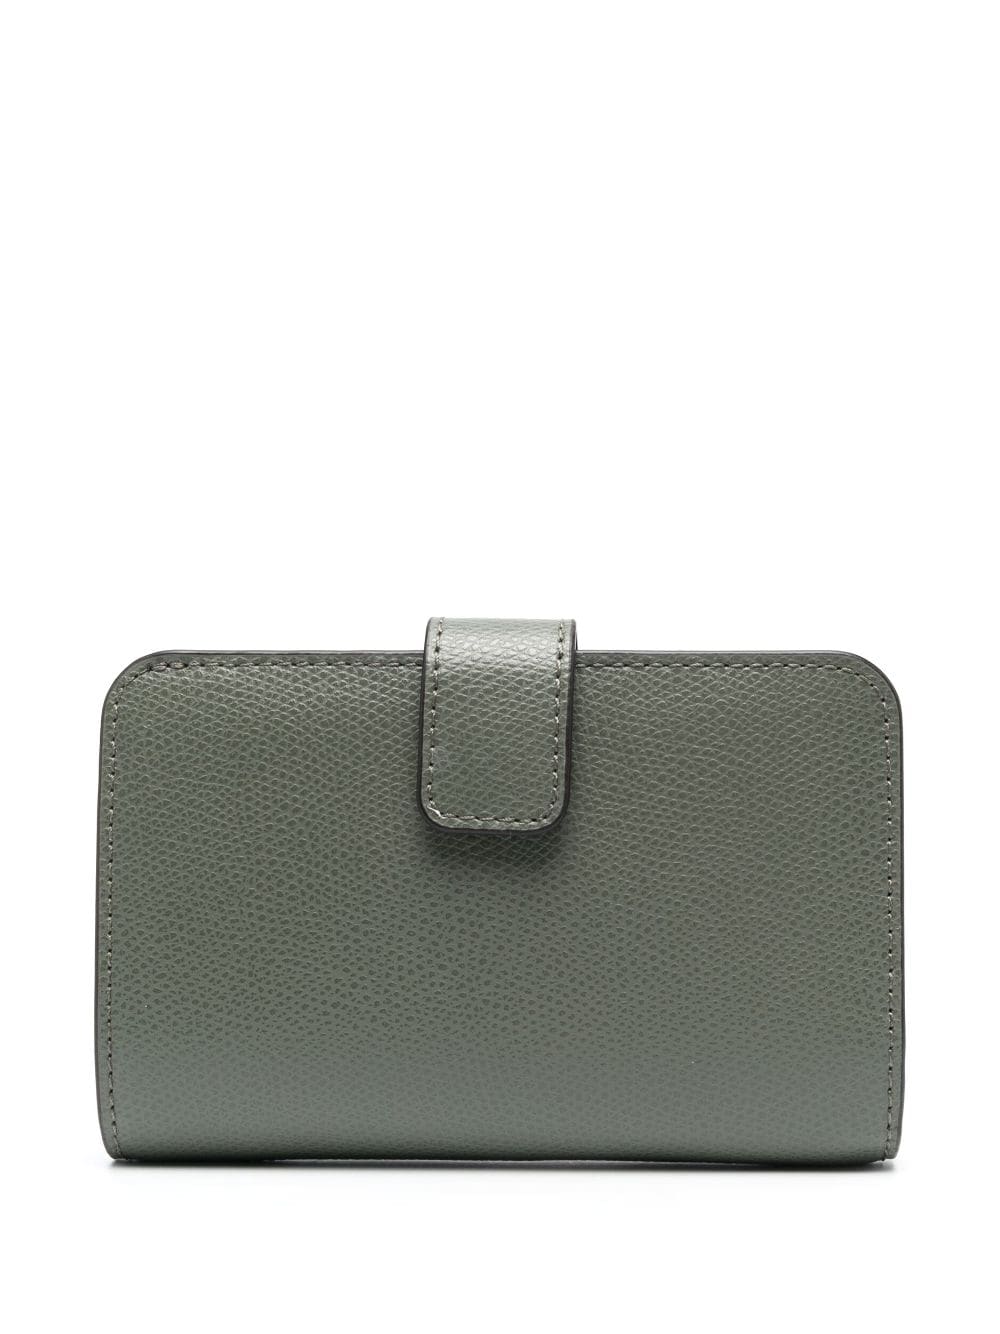 Furla logo-plaque leather wallet - Groen